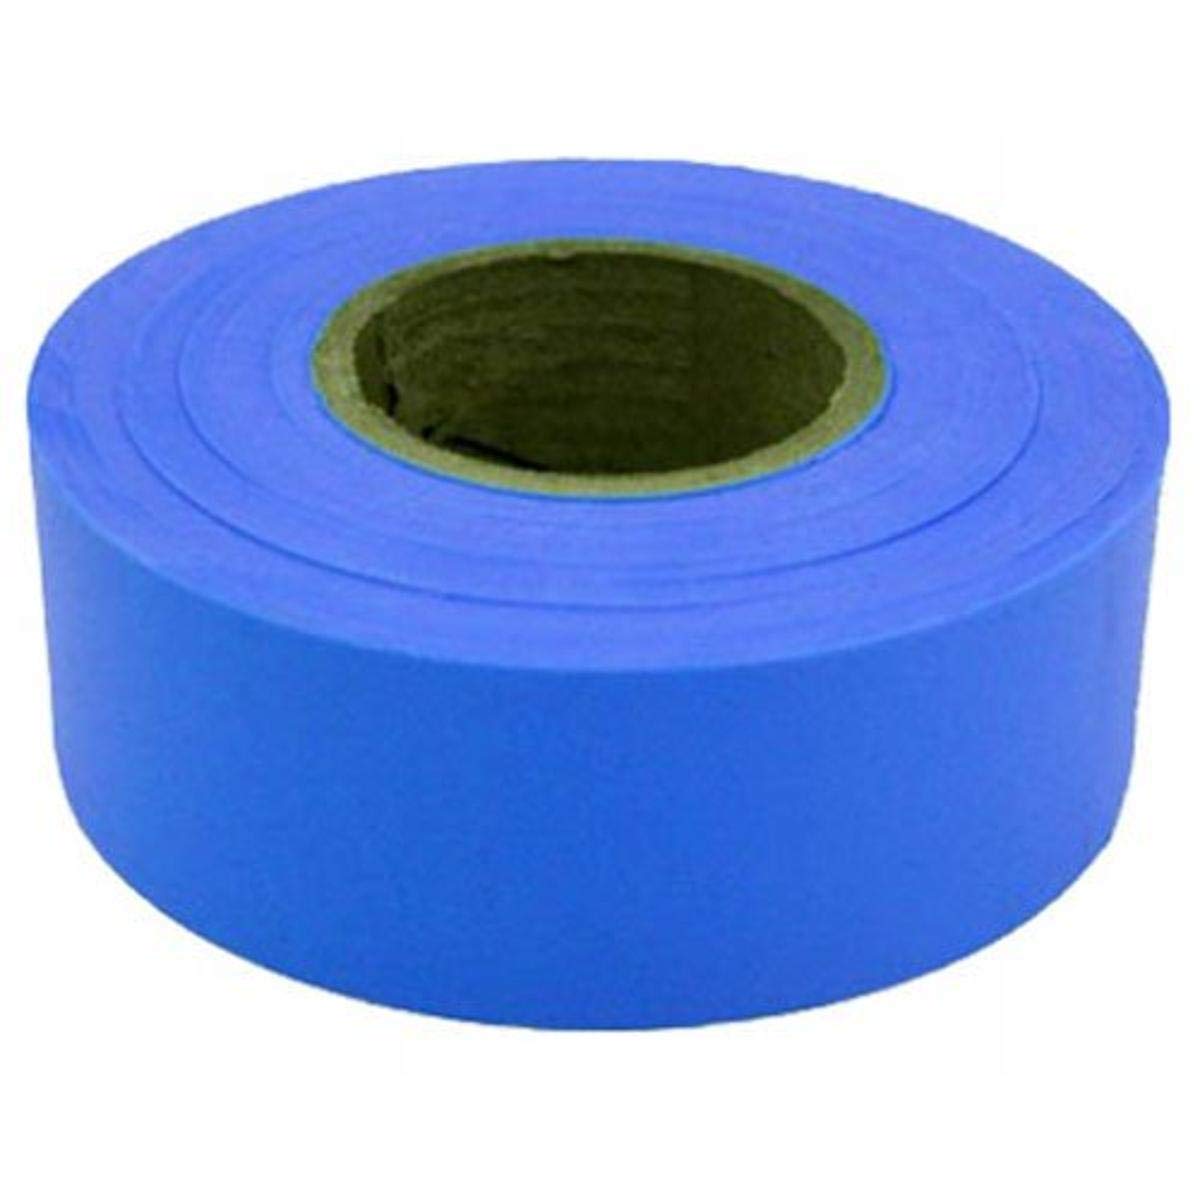 Fluorescent Orange Flagging Tape 1 3/16 x 150 ft Roll Non-Adhesive (12  Roll/Case)